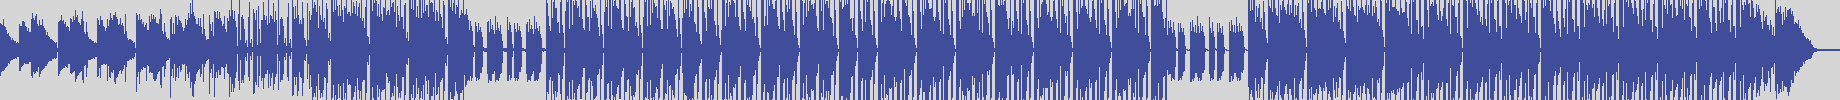 nf_boyz_records [NFY089] Rick Loveland - Byzantino [Mark Dacosta Mix] audio wave form